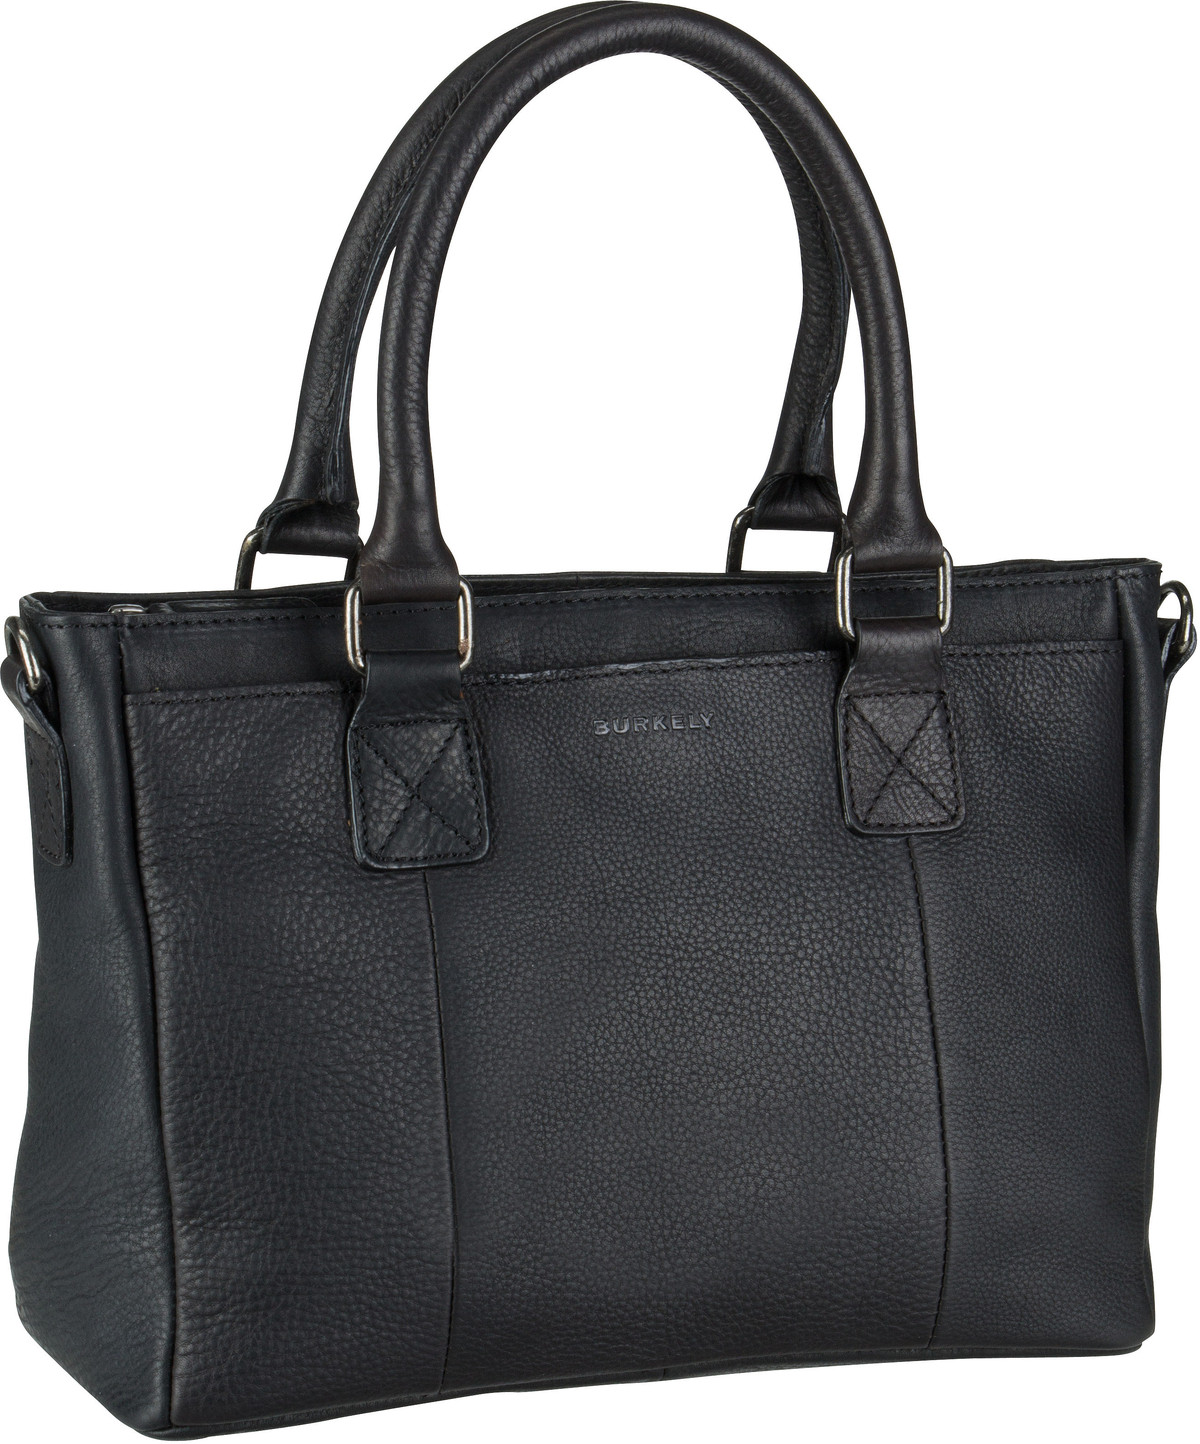 Burkely Antique Avery Handbag S 6956 - Black